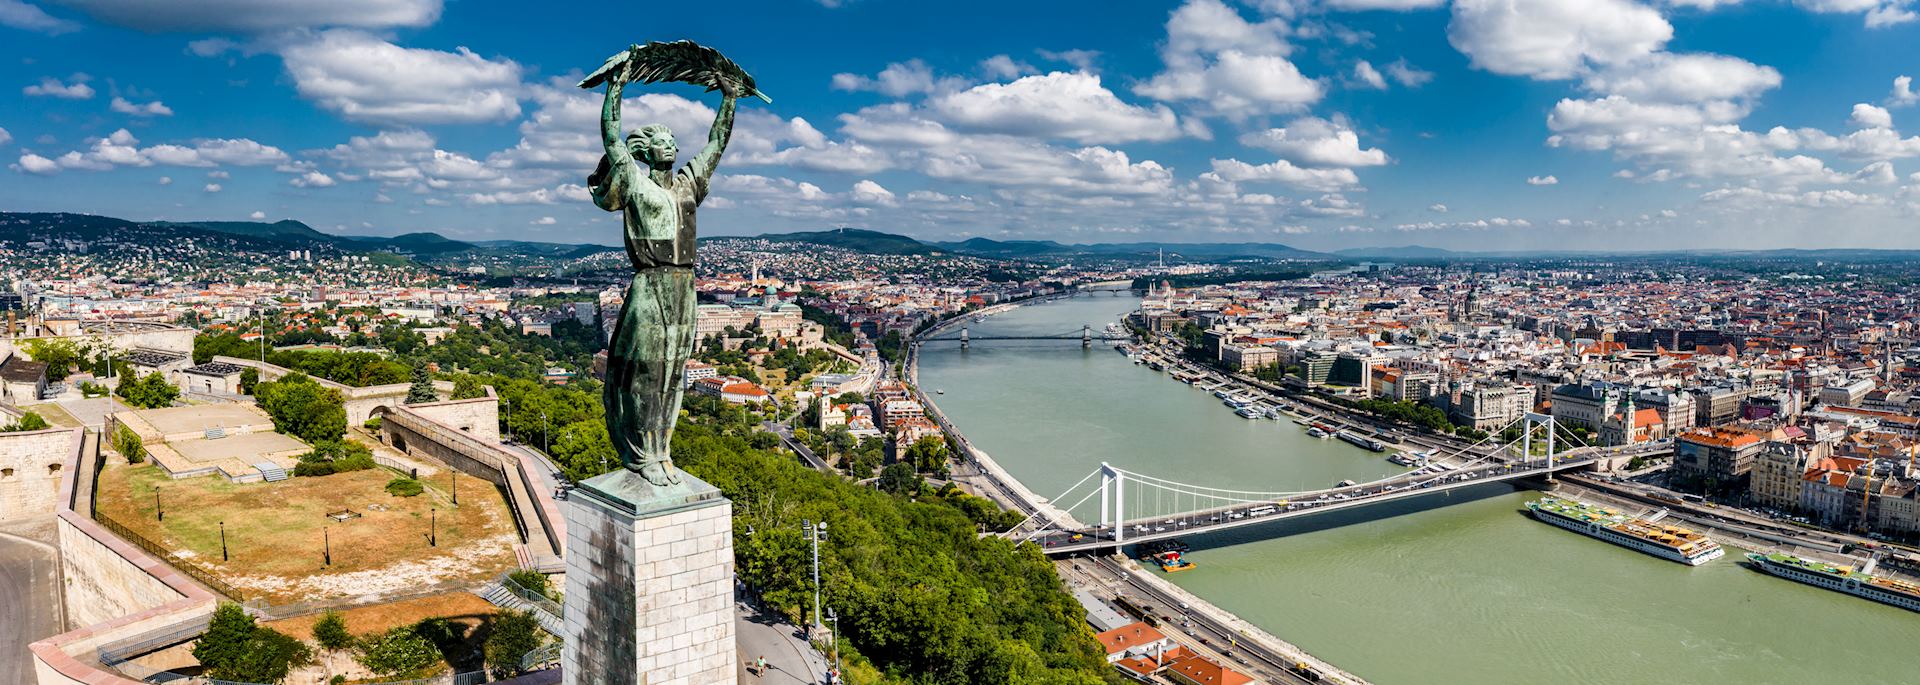 Statue of Liberty, Budapest